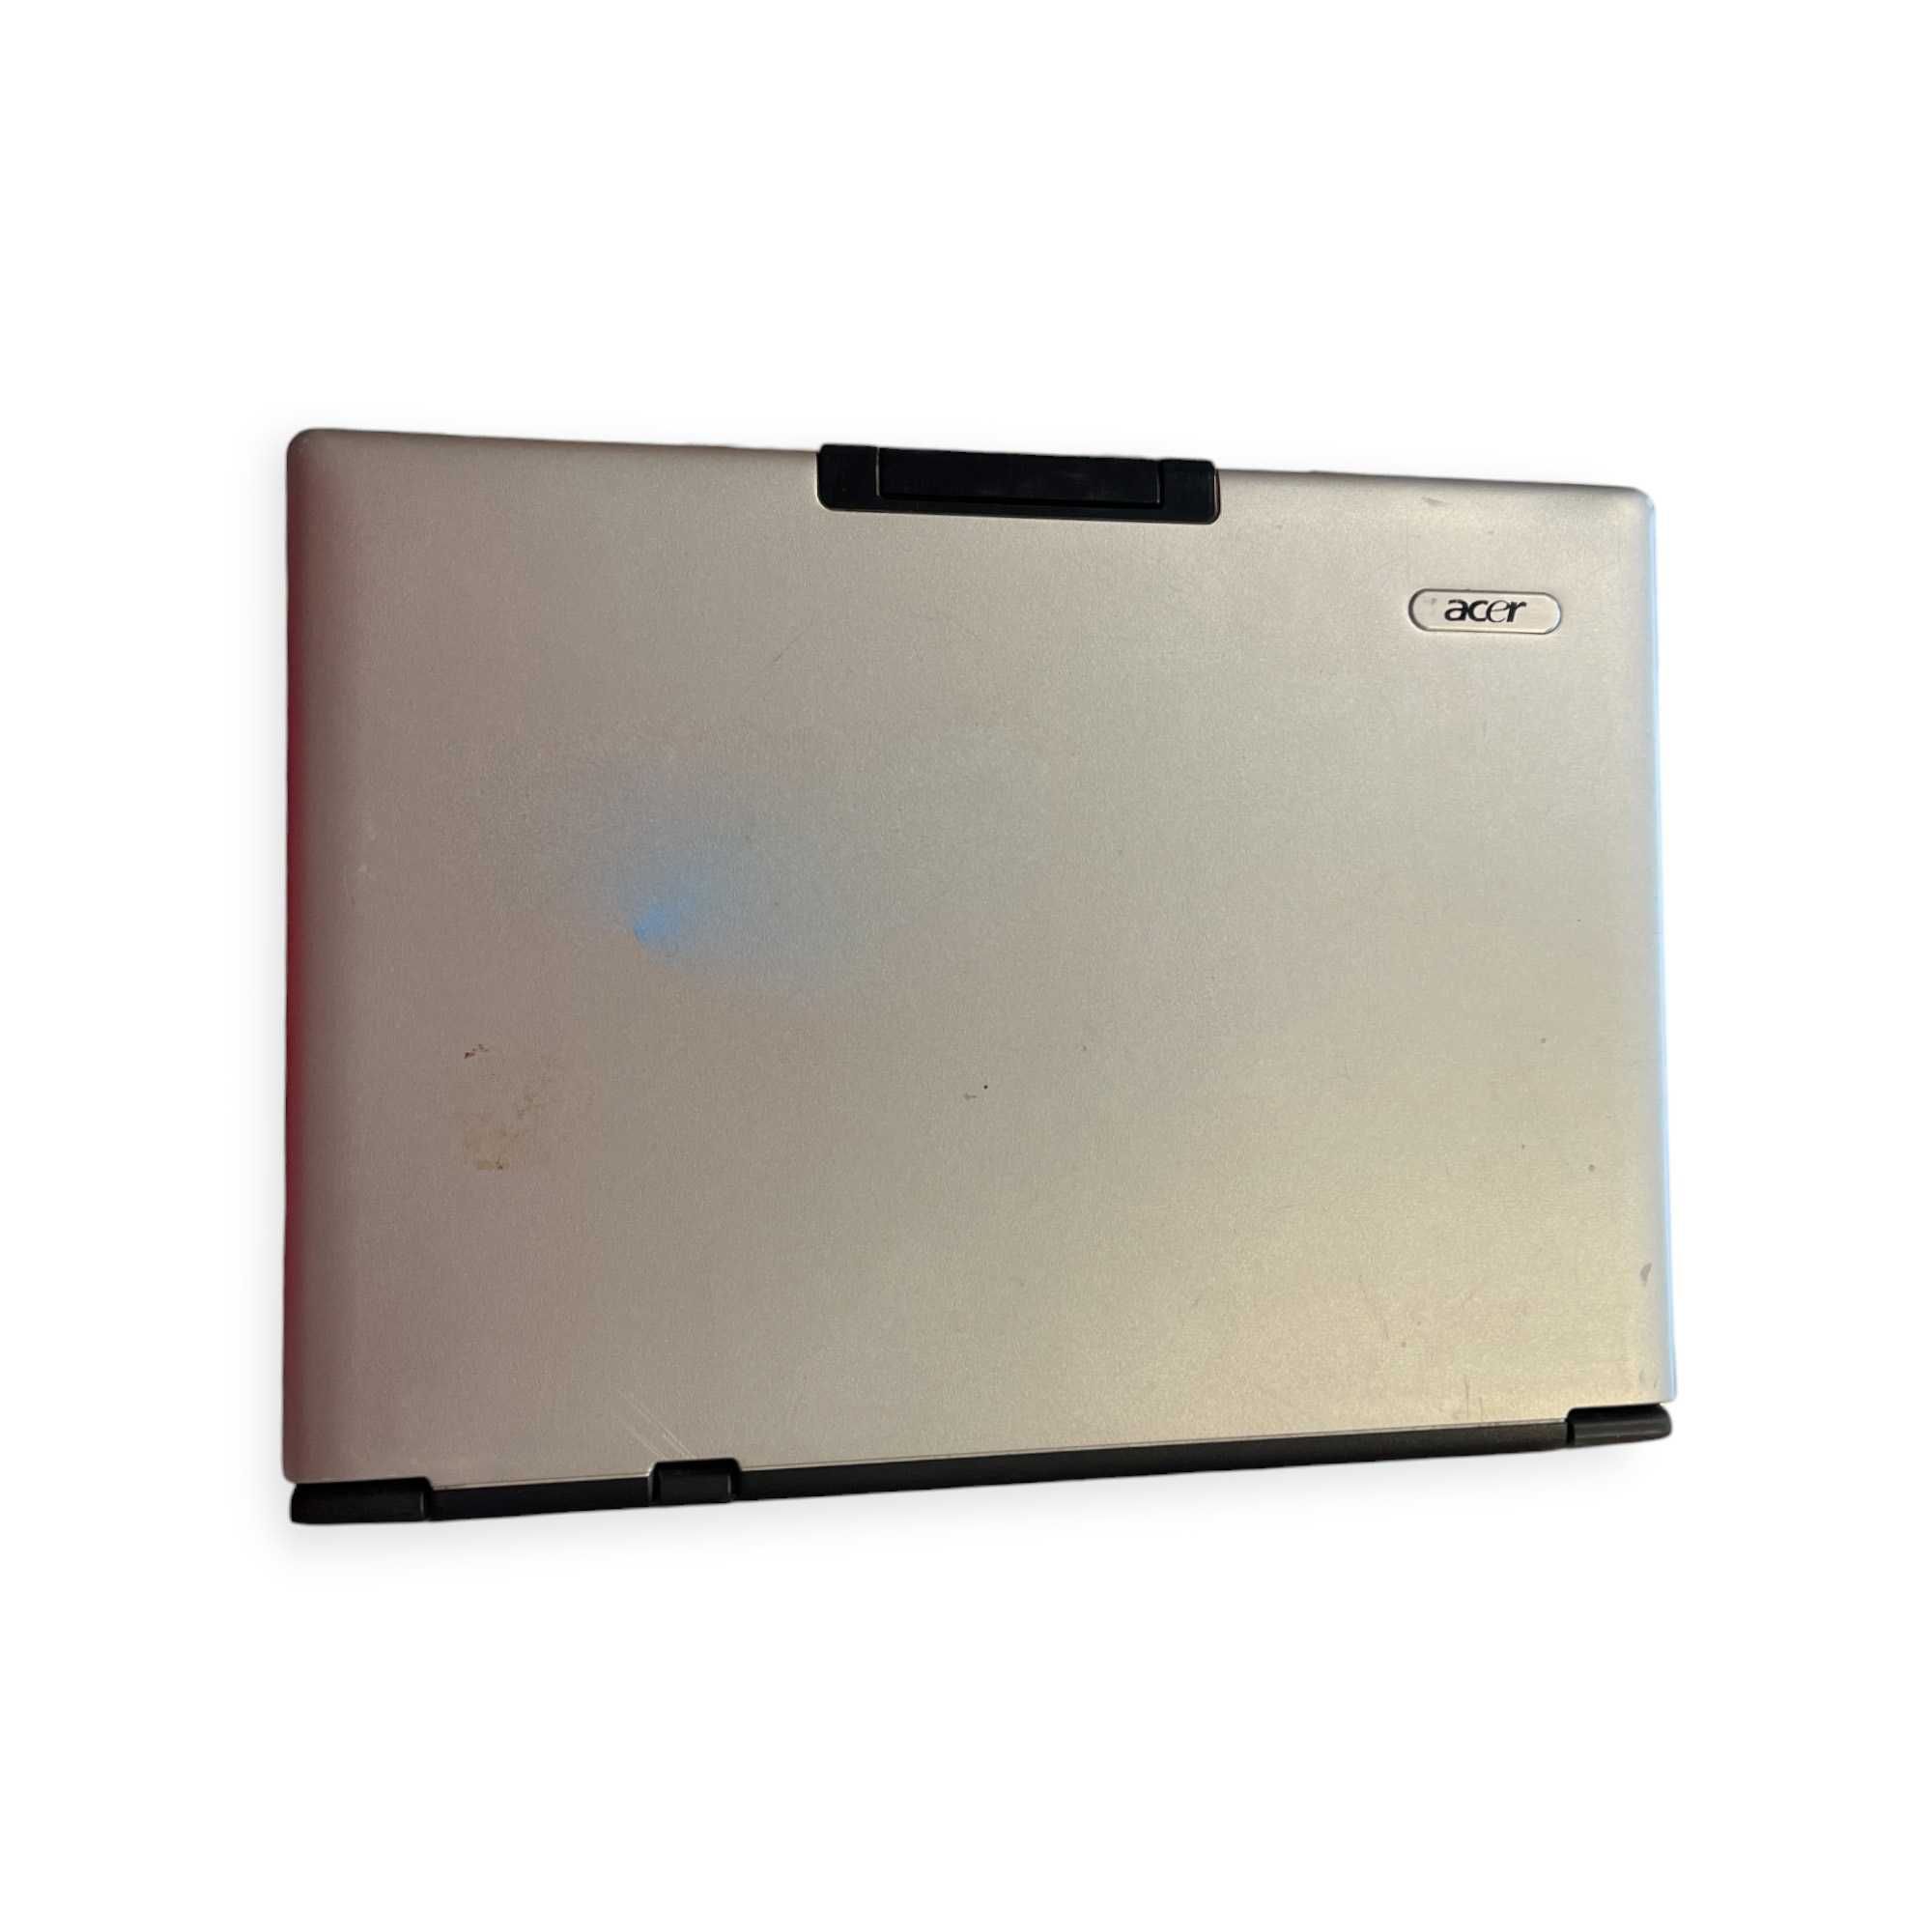 Portátil Acer Aspire 5600 zb2 Intel T2300 2GB Ram 160GB HDD Linux Mint